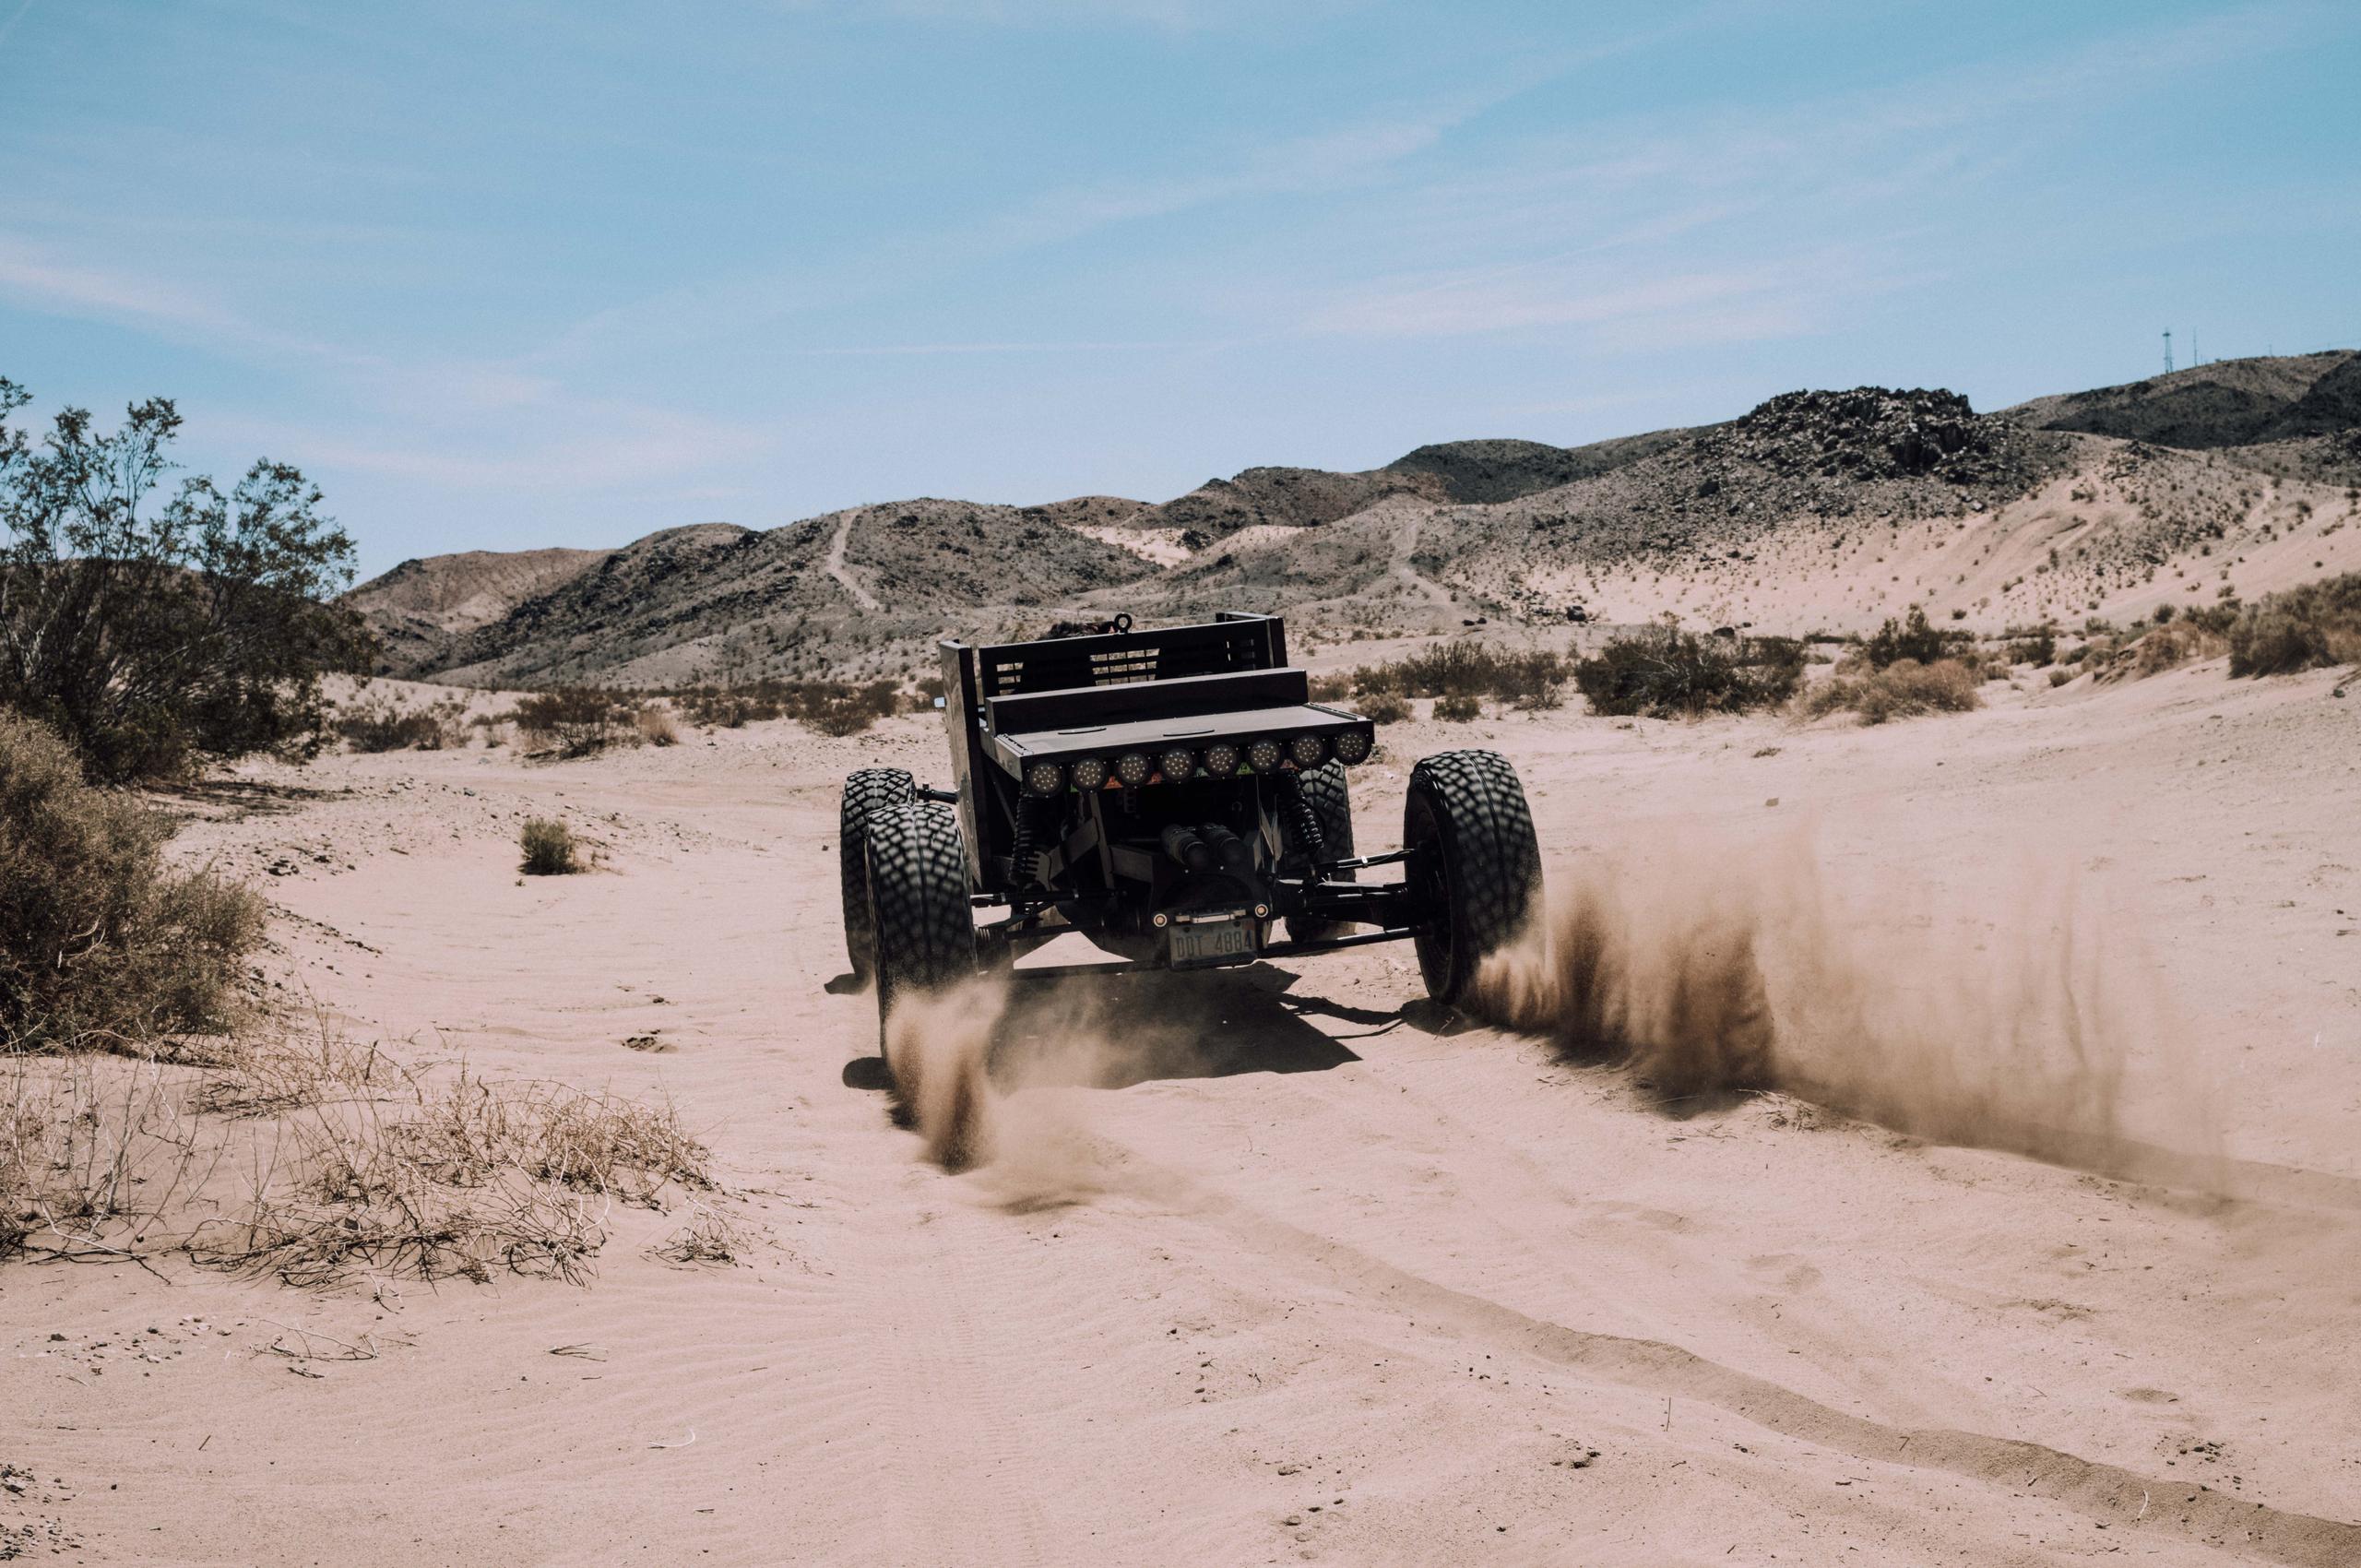 Custom black vehicle driving through desert kicking up sand